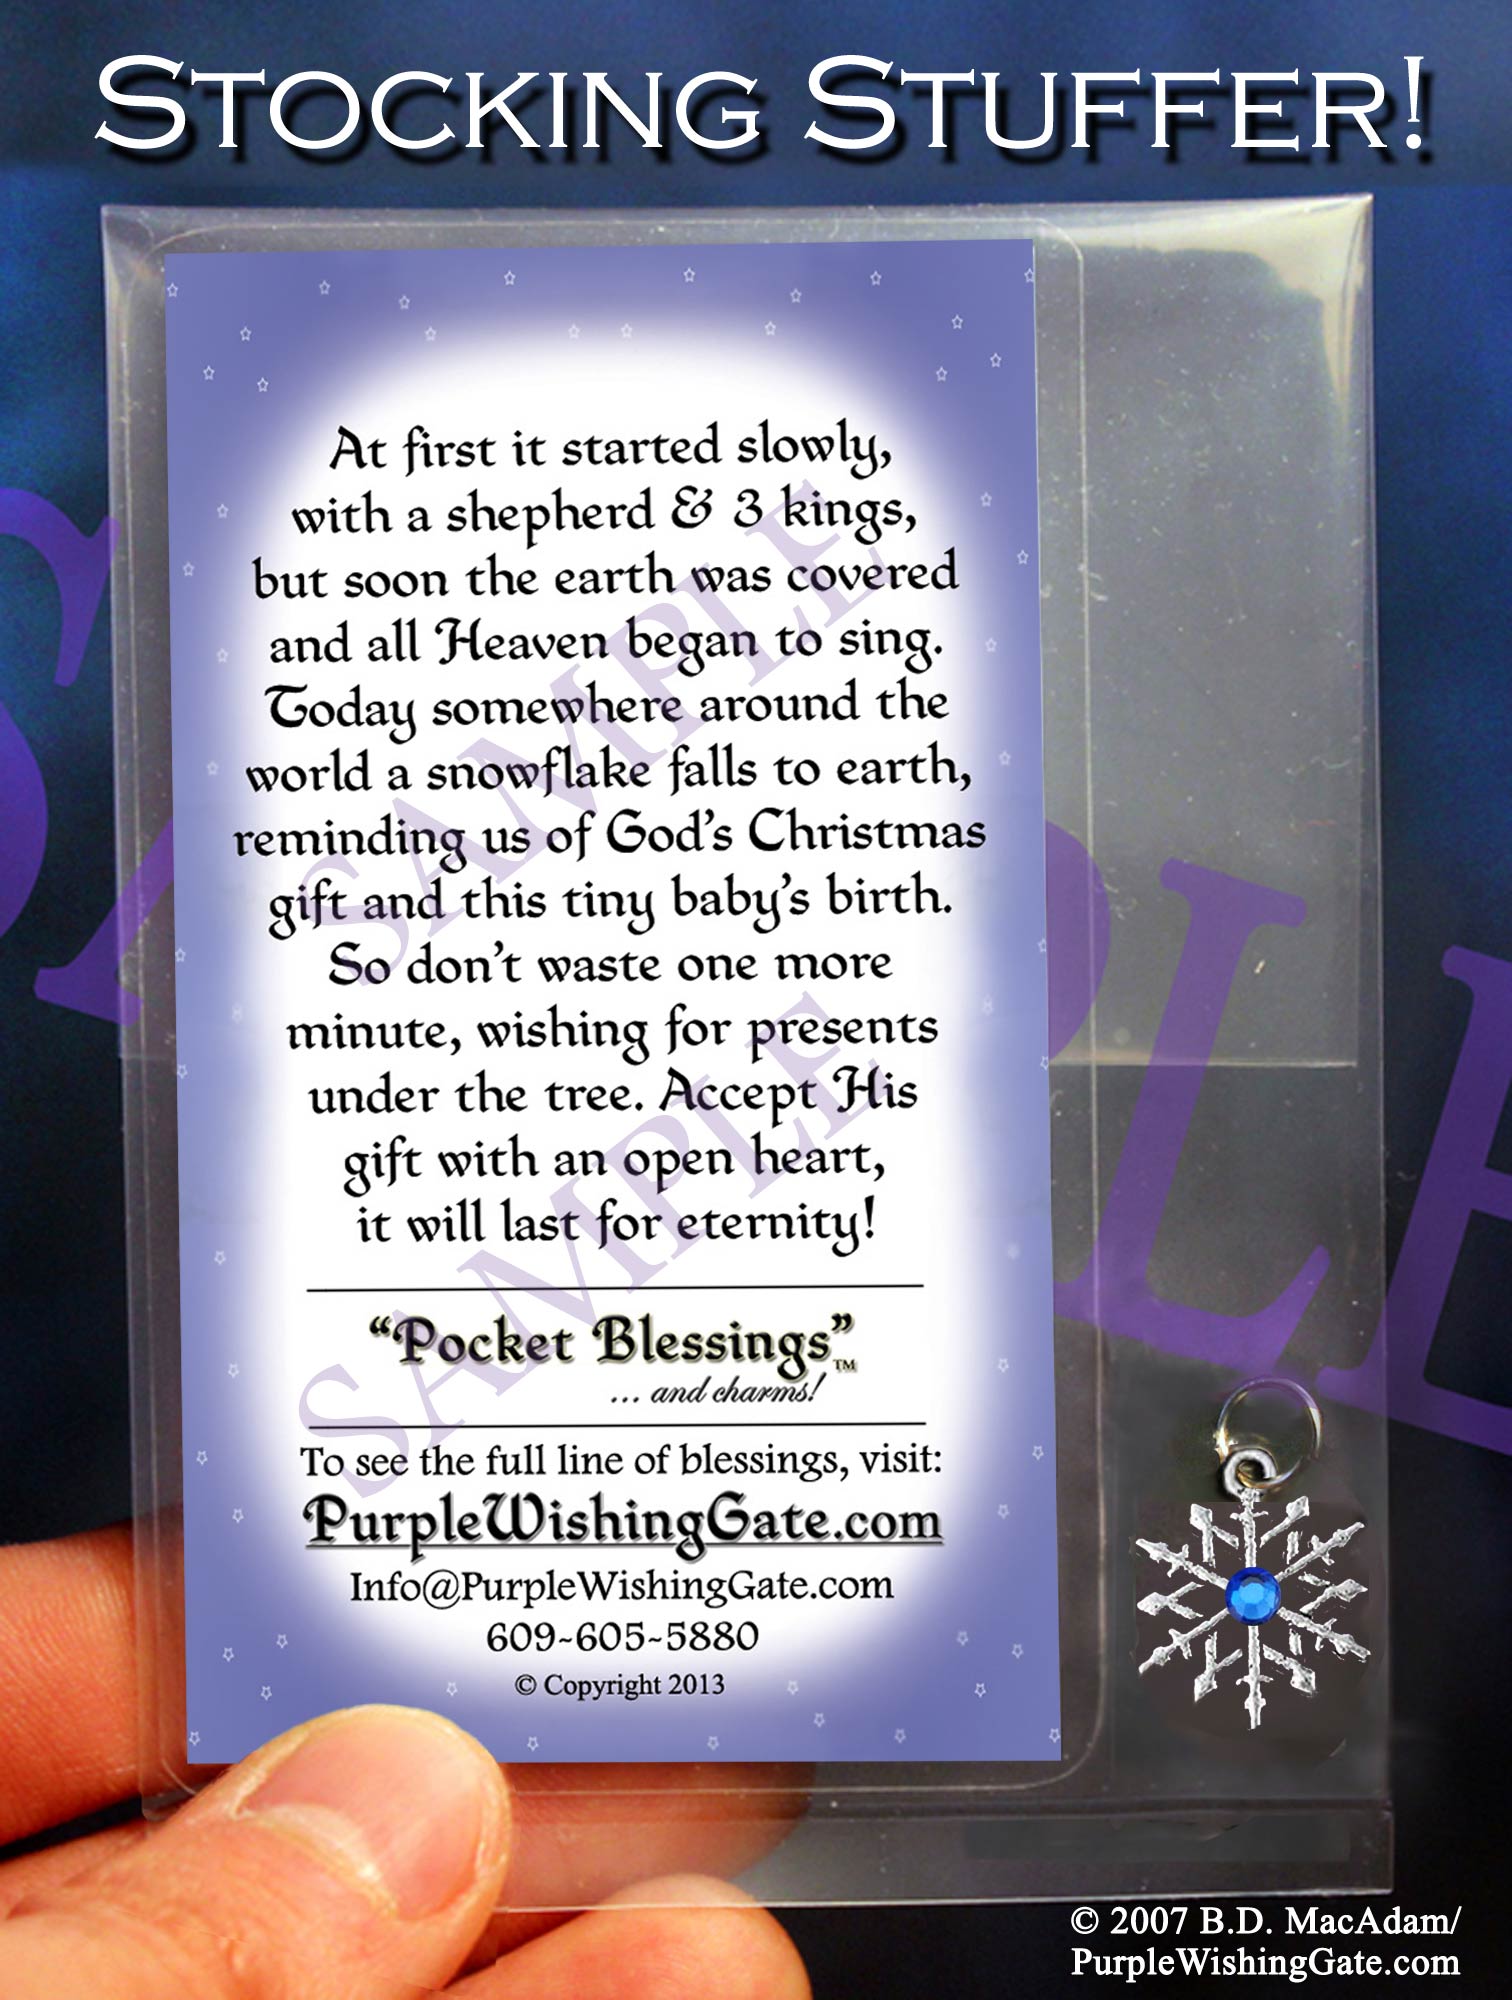 The Christmas Gift - Stocking Stuffers | PurpleWishingGate.com